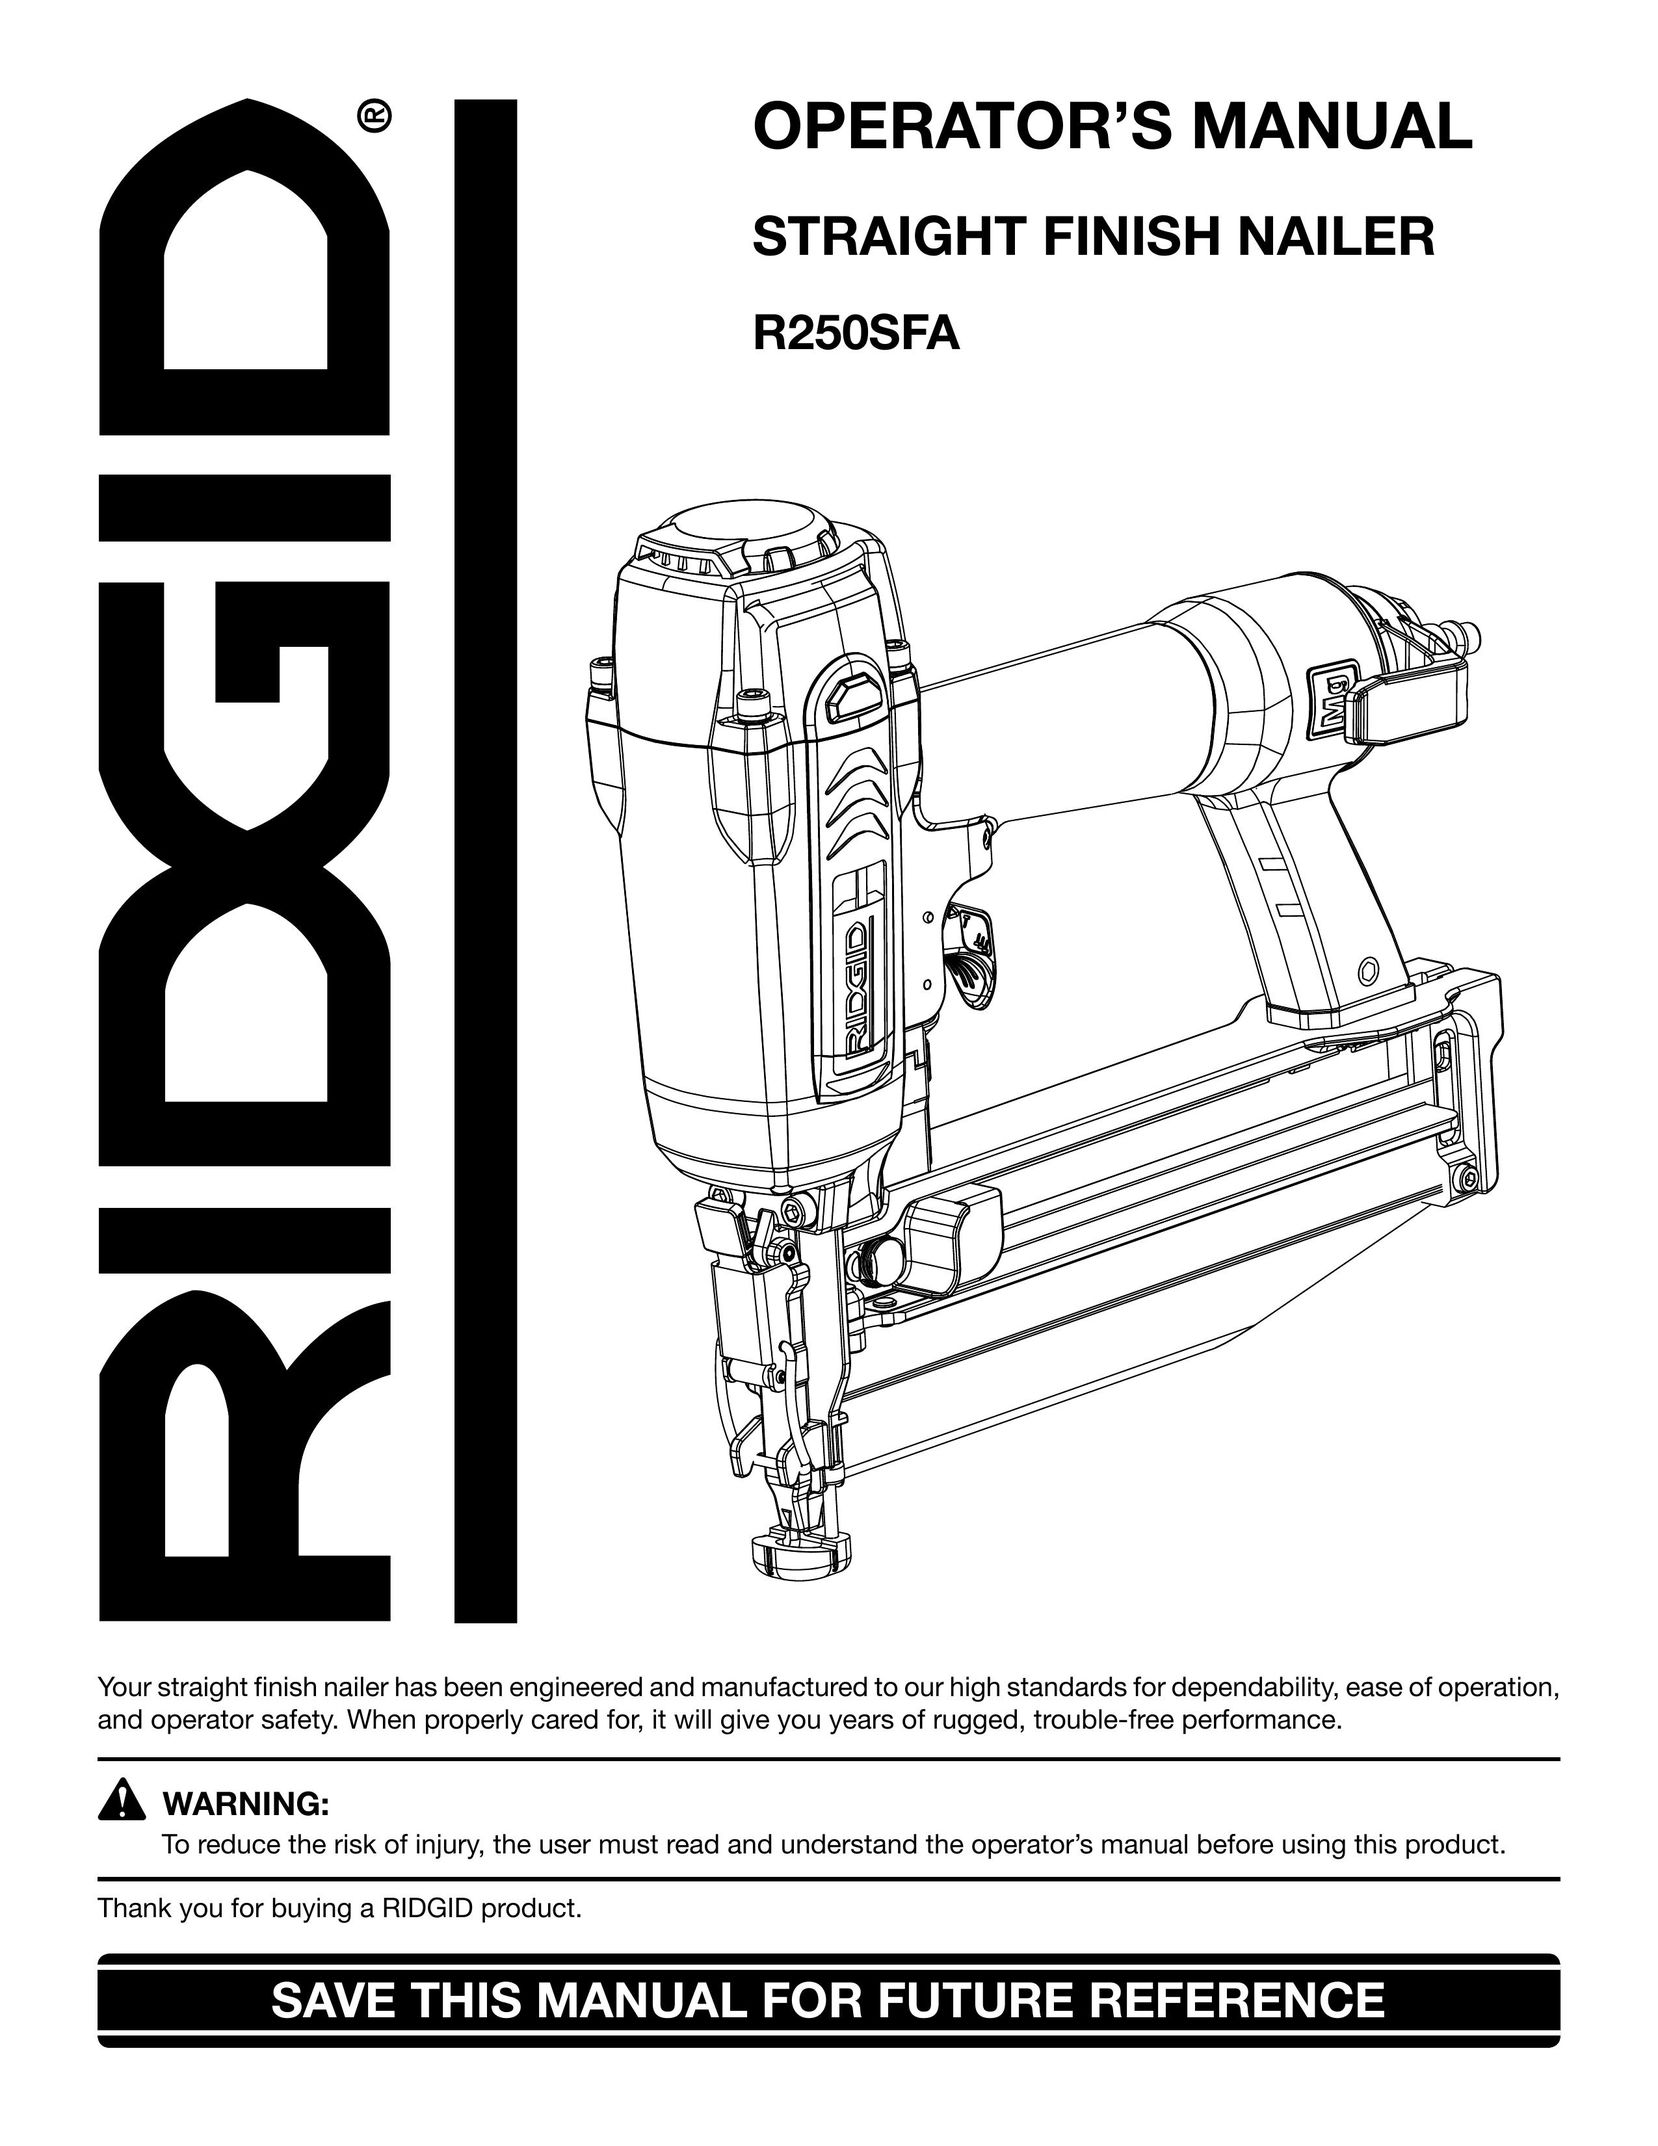 RIDGID R250SFA Nail Gun User Manual